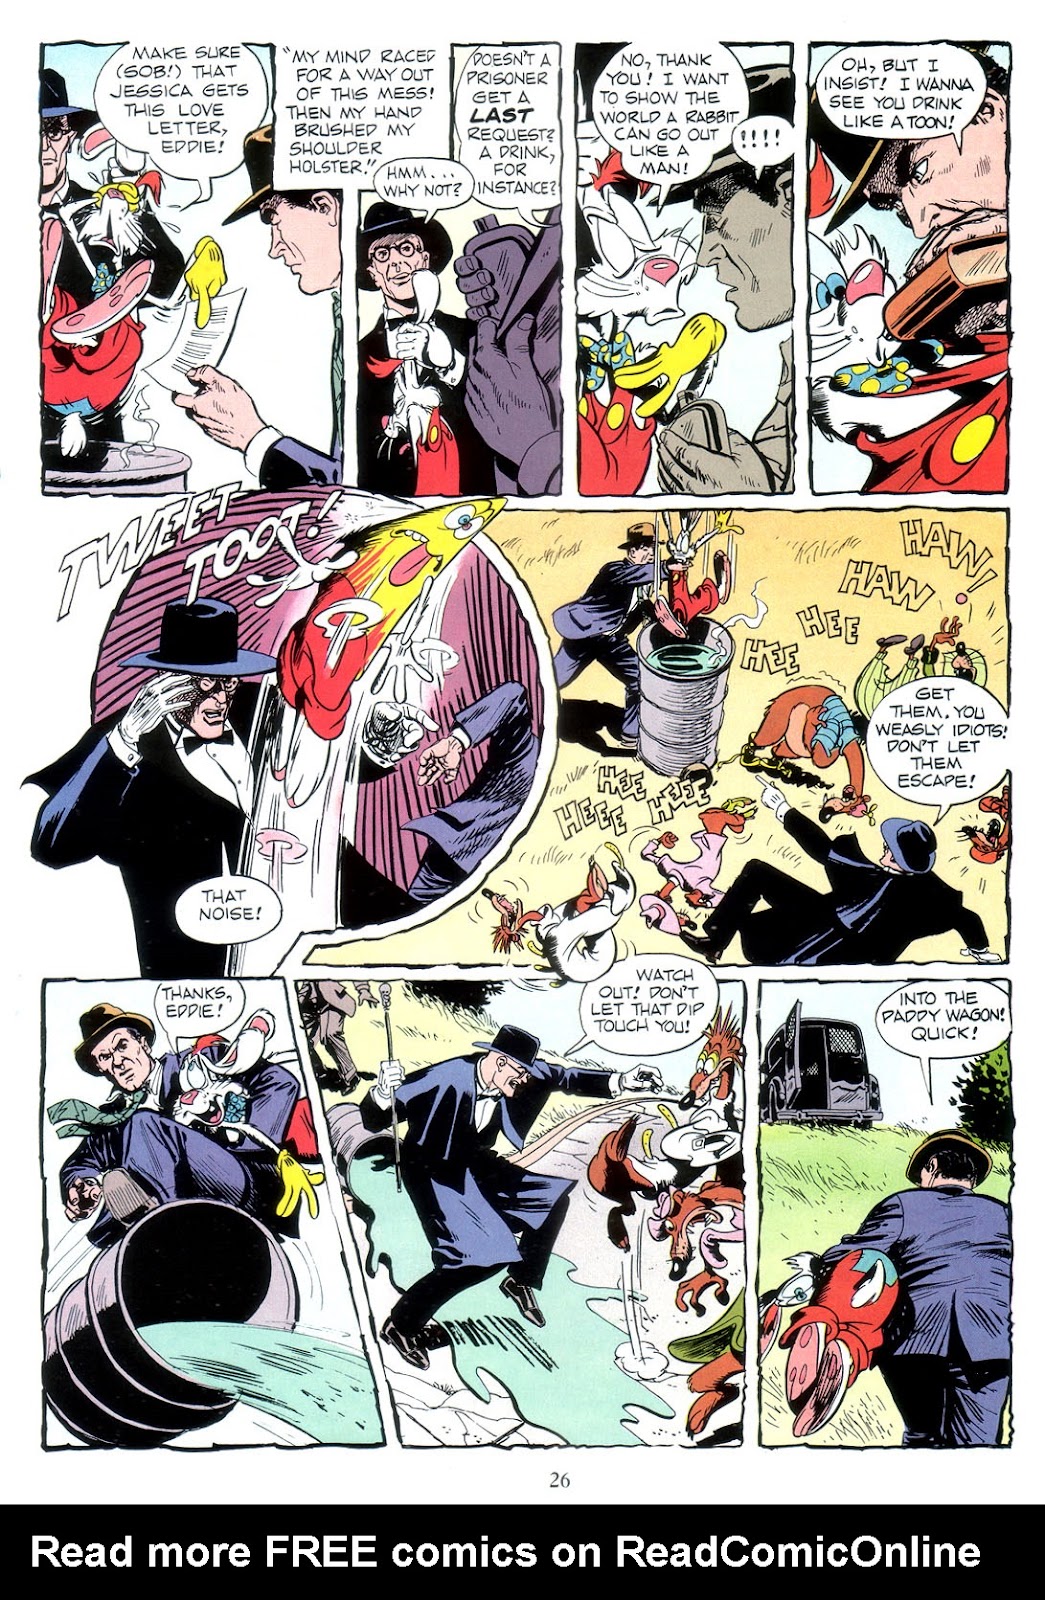 Marvel Graphic Novel issue 41 - Who Framed Roger Rabbit - Page 28